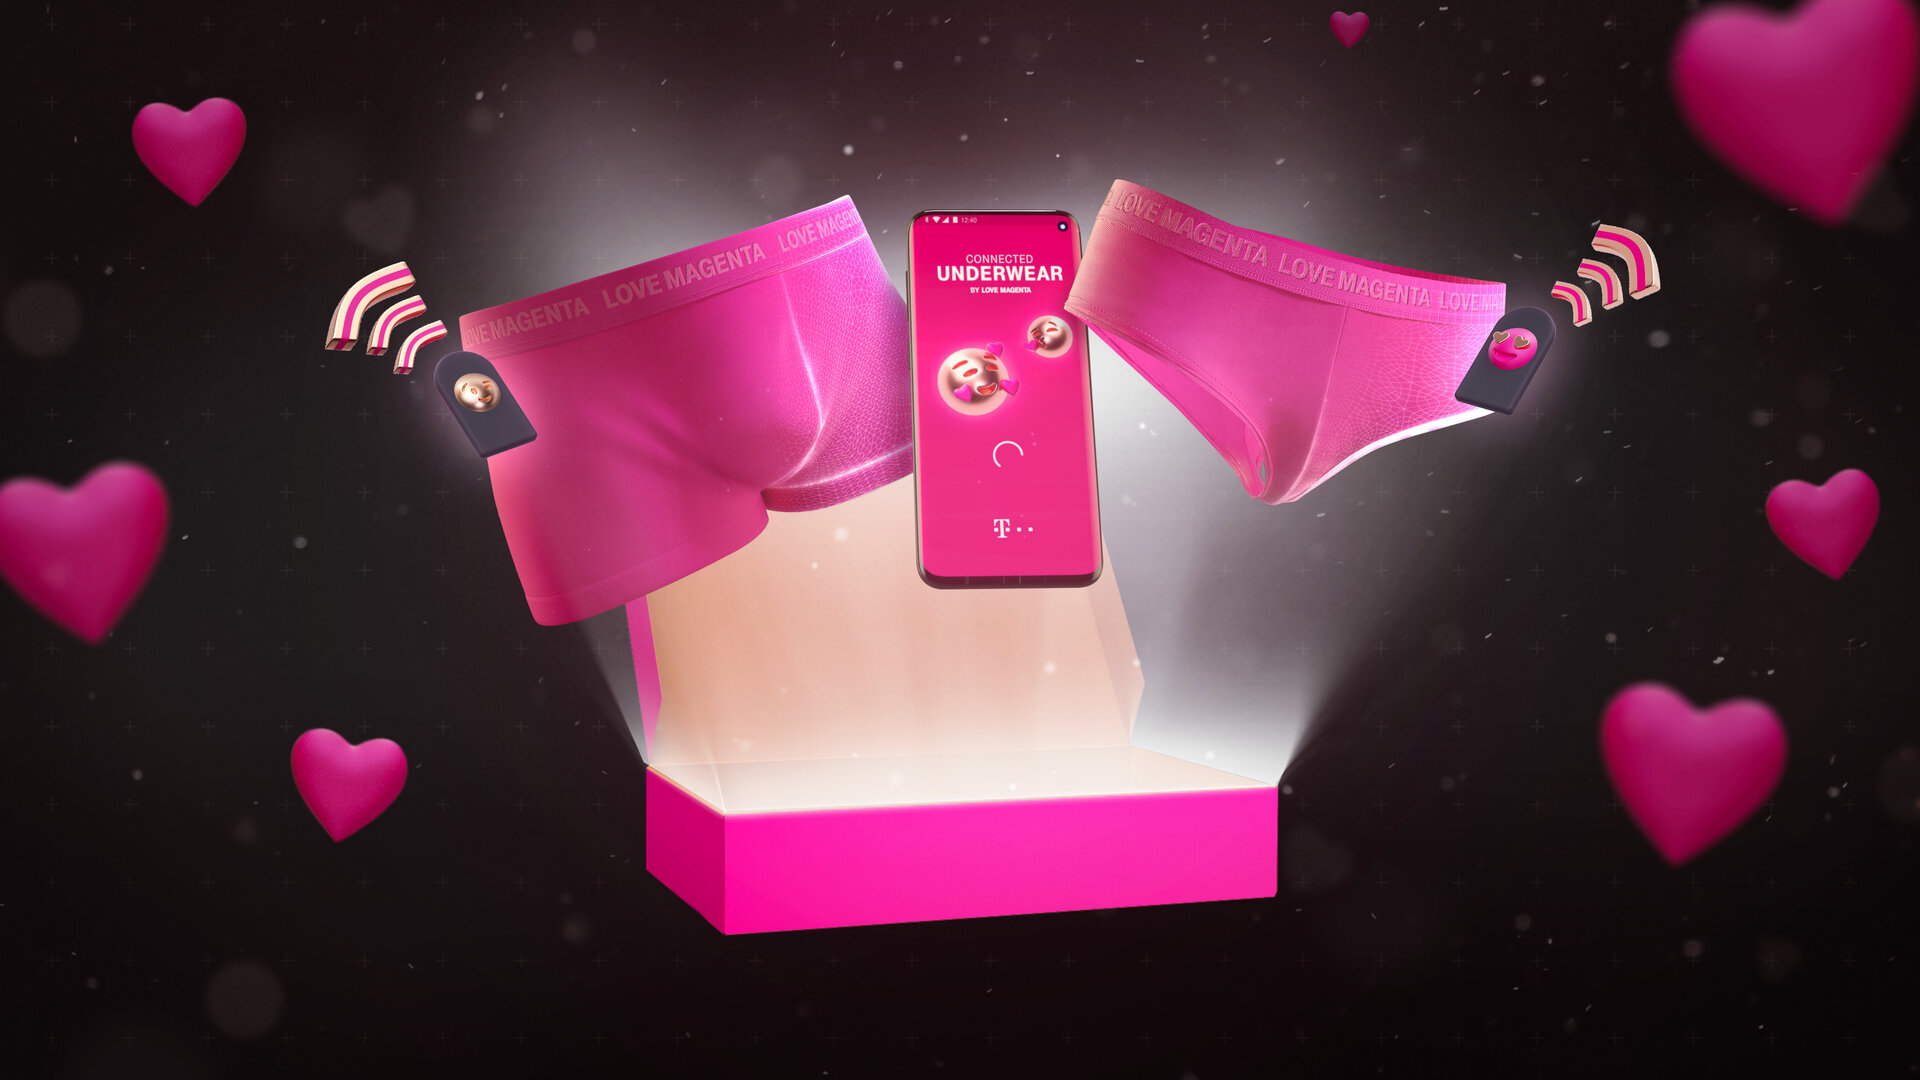 Telekom Love Magenta Connected underwear